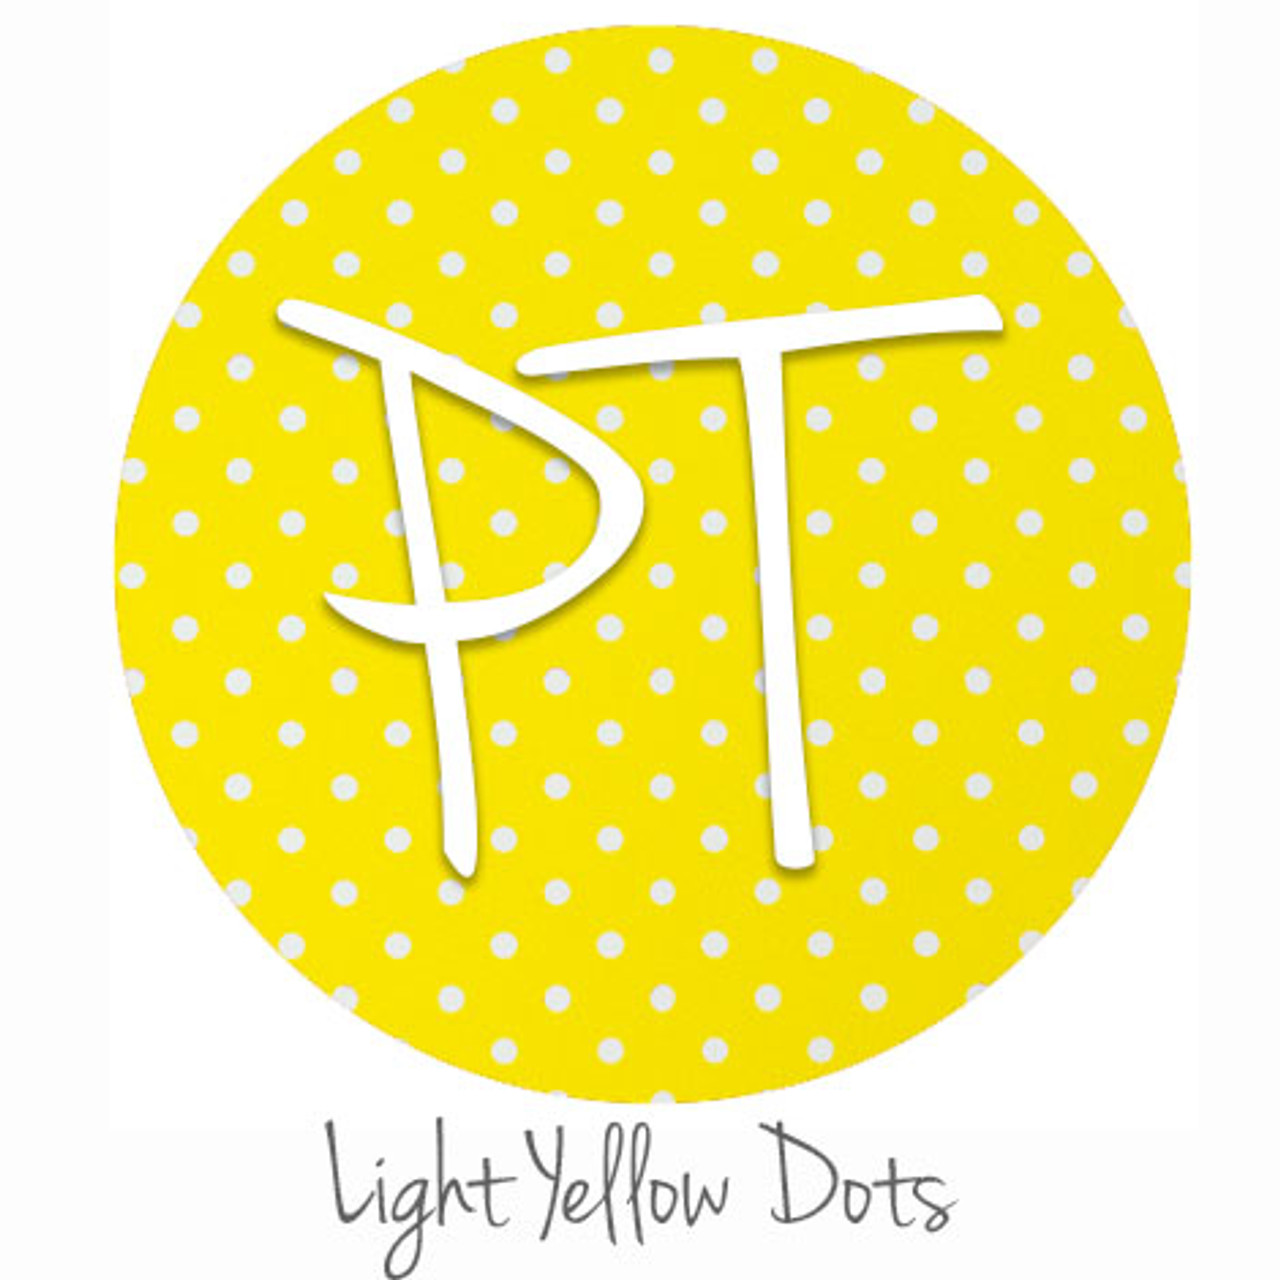 12x12 Patterned Heat Transfer Vinyl - Dots - Light Yellow